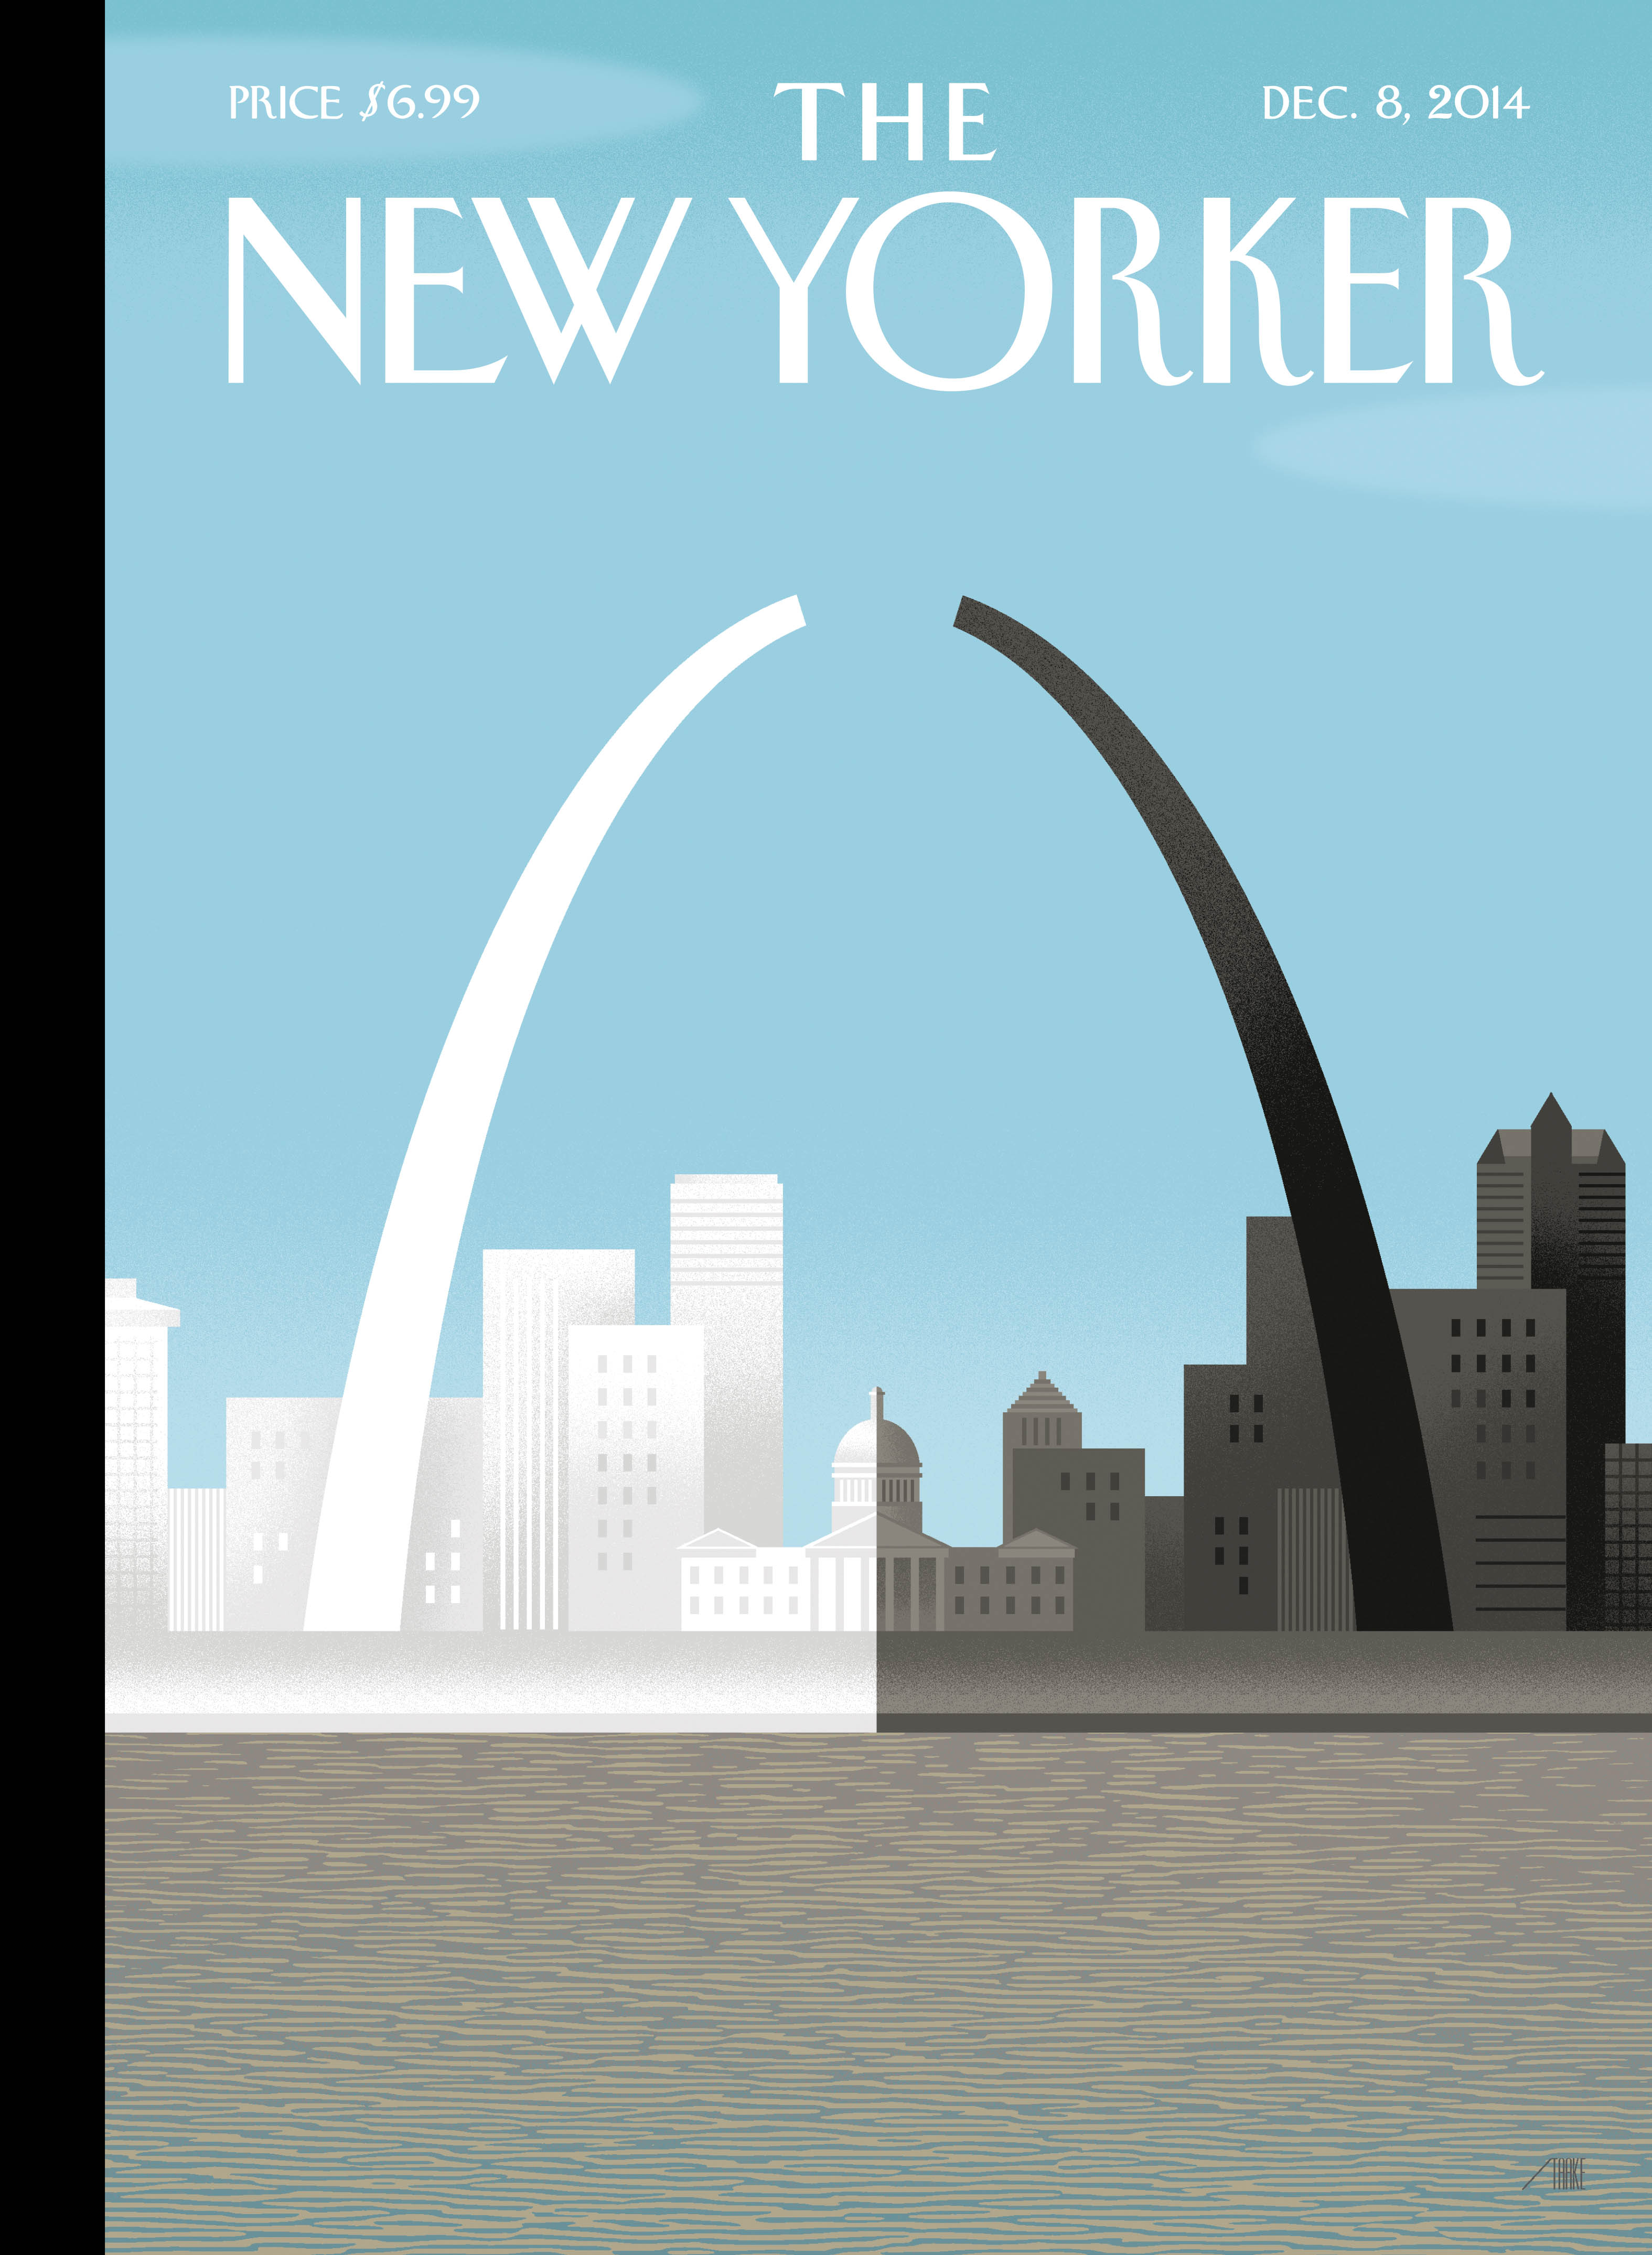 The New Yorker-December 8, 2014, "Broken Arch"